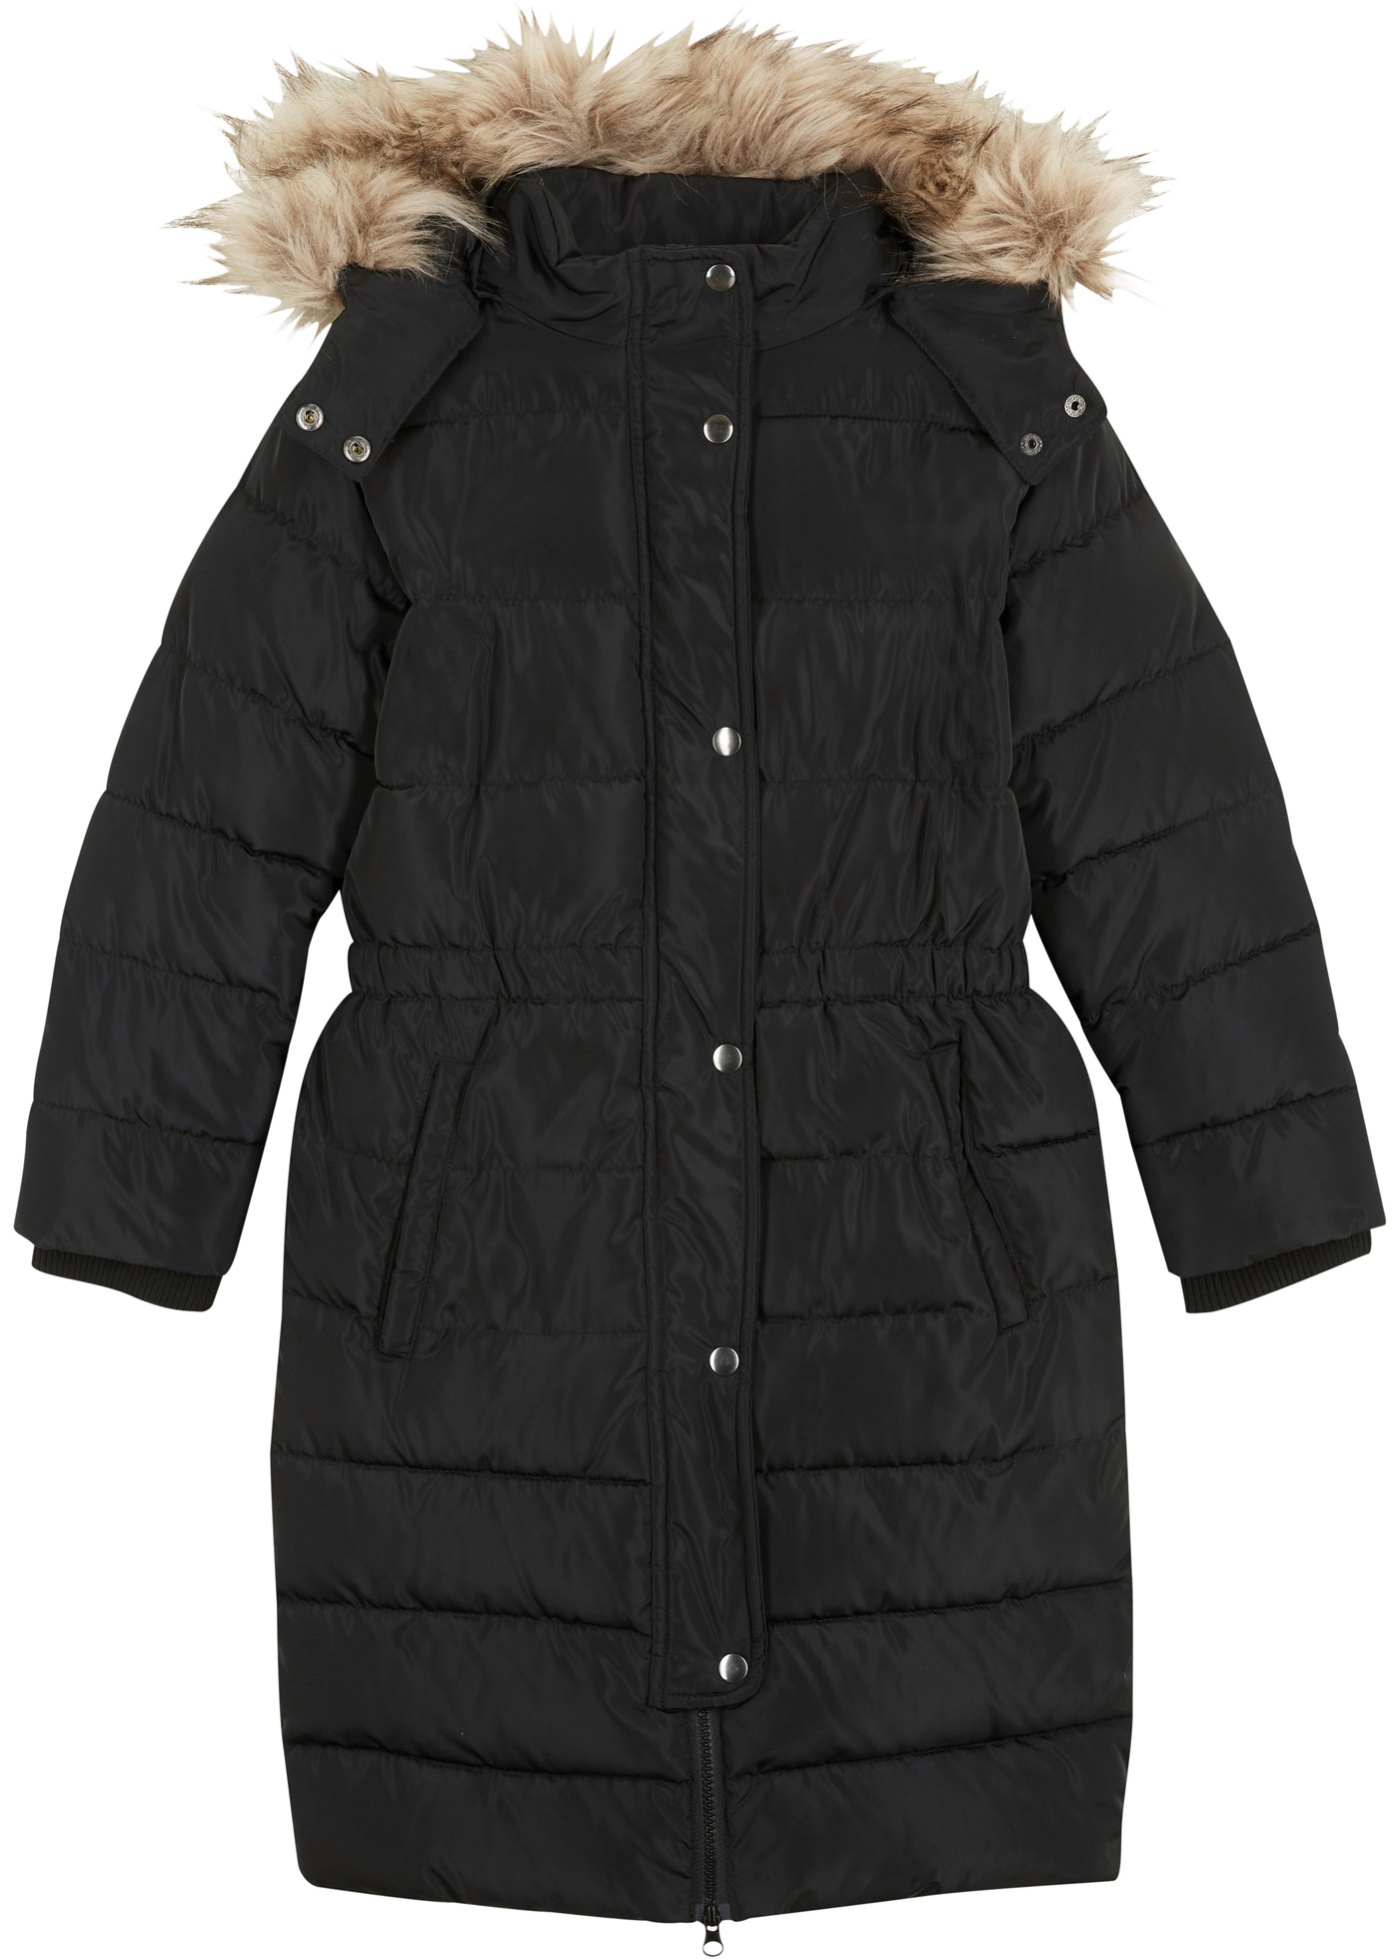 Vatovaná bunda pre dievčatá, s odnímateľnou kapucňou